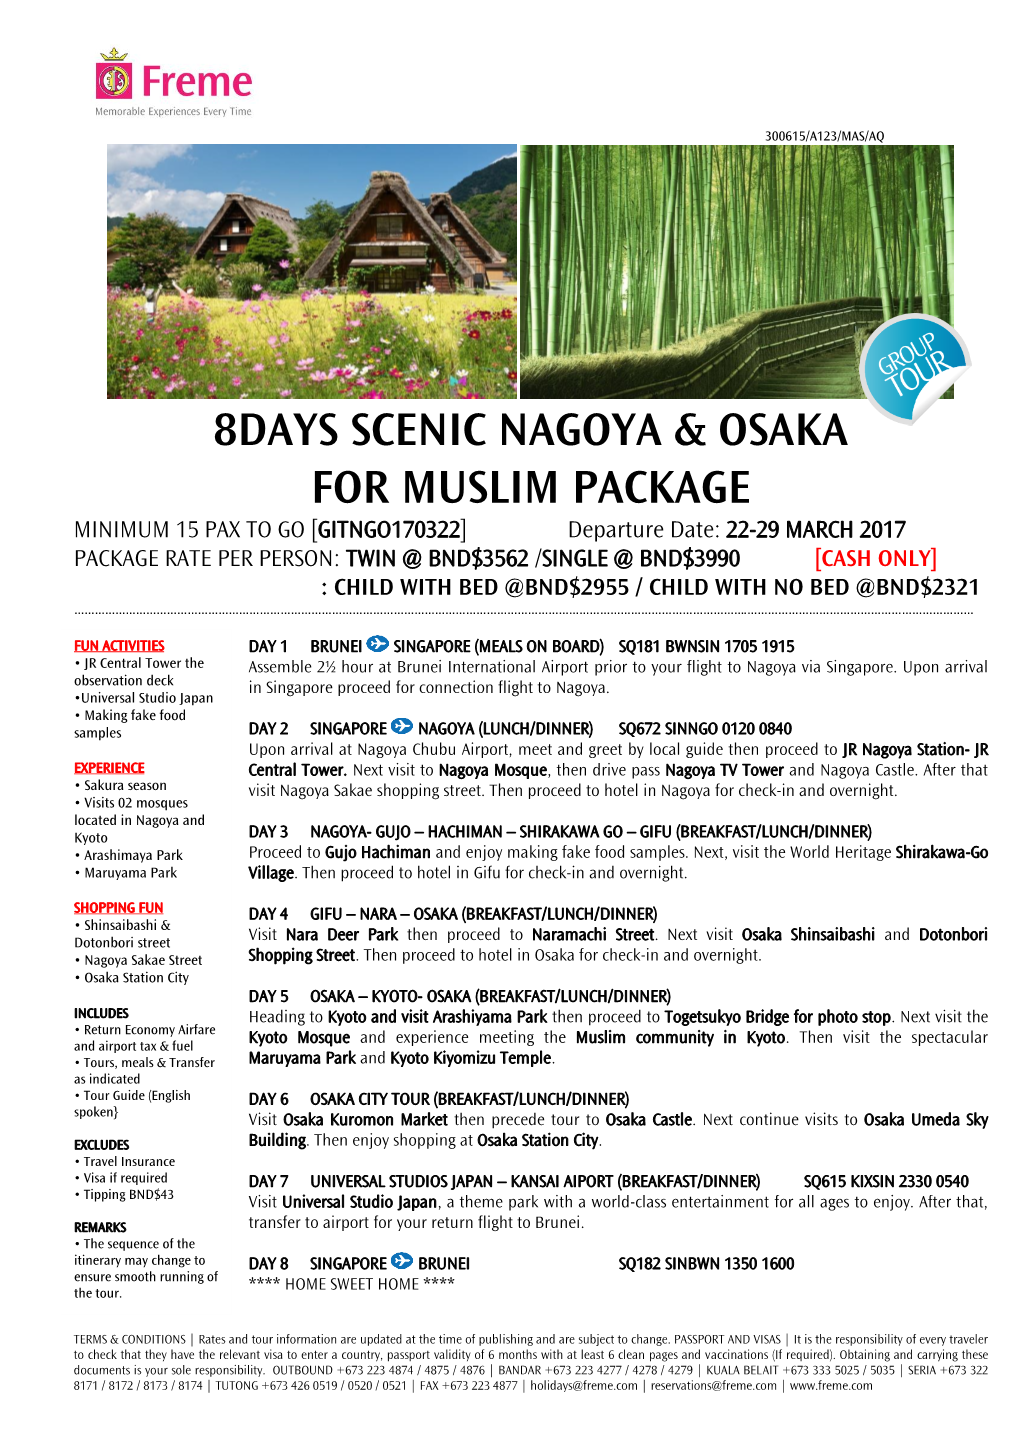 8Days Scenic Nagoya & Osaka for Muslim Package